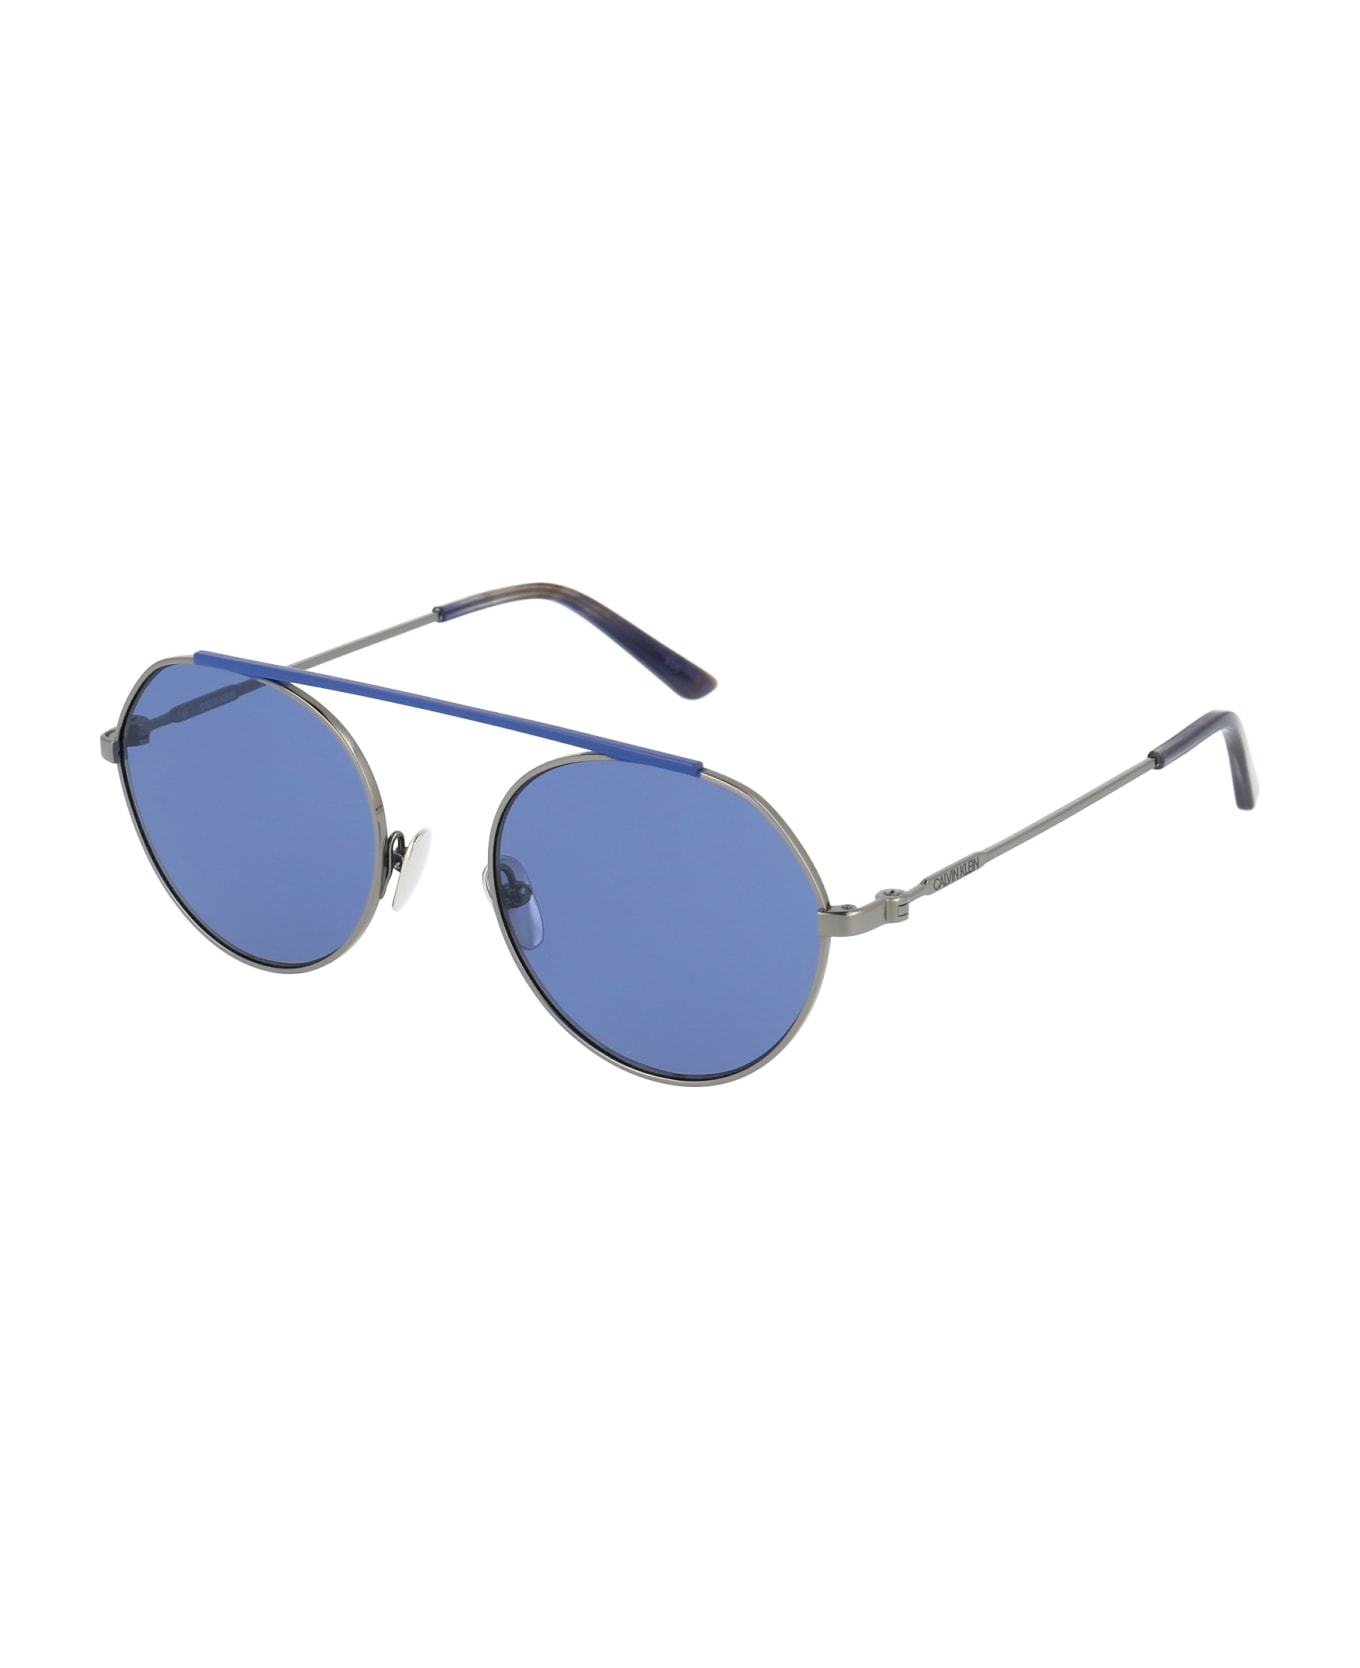 Calvin Klein Ck19149s Sunglasses - 009 BLUE